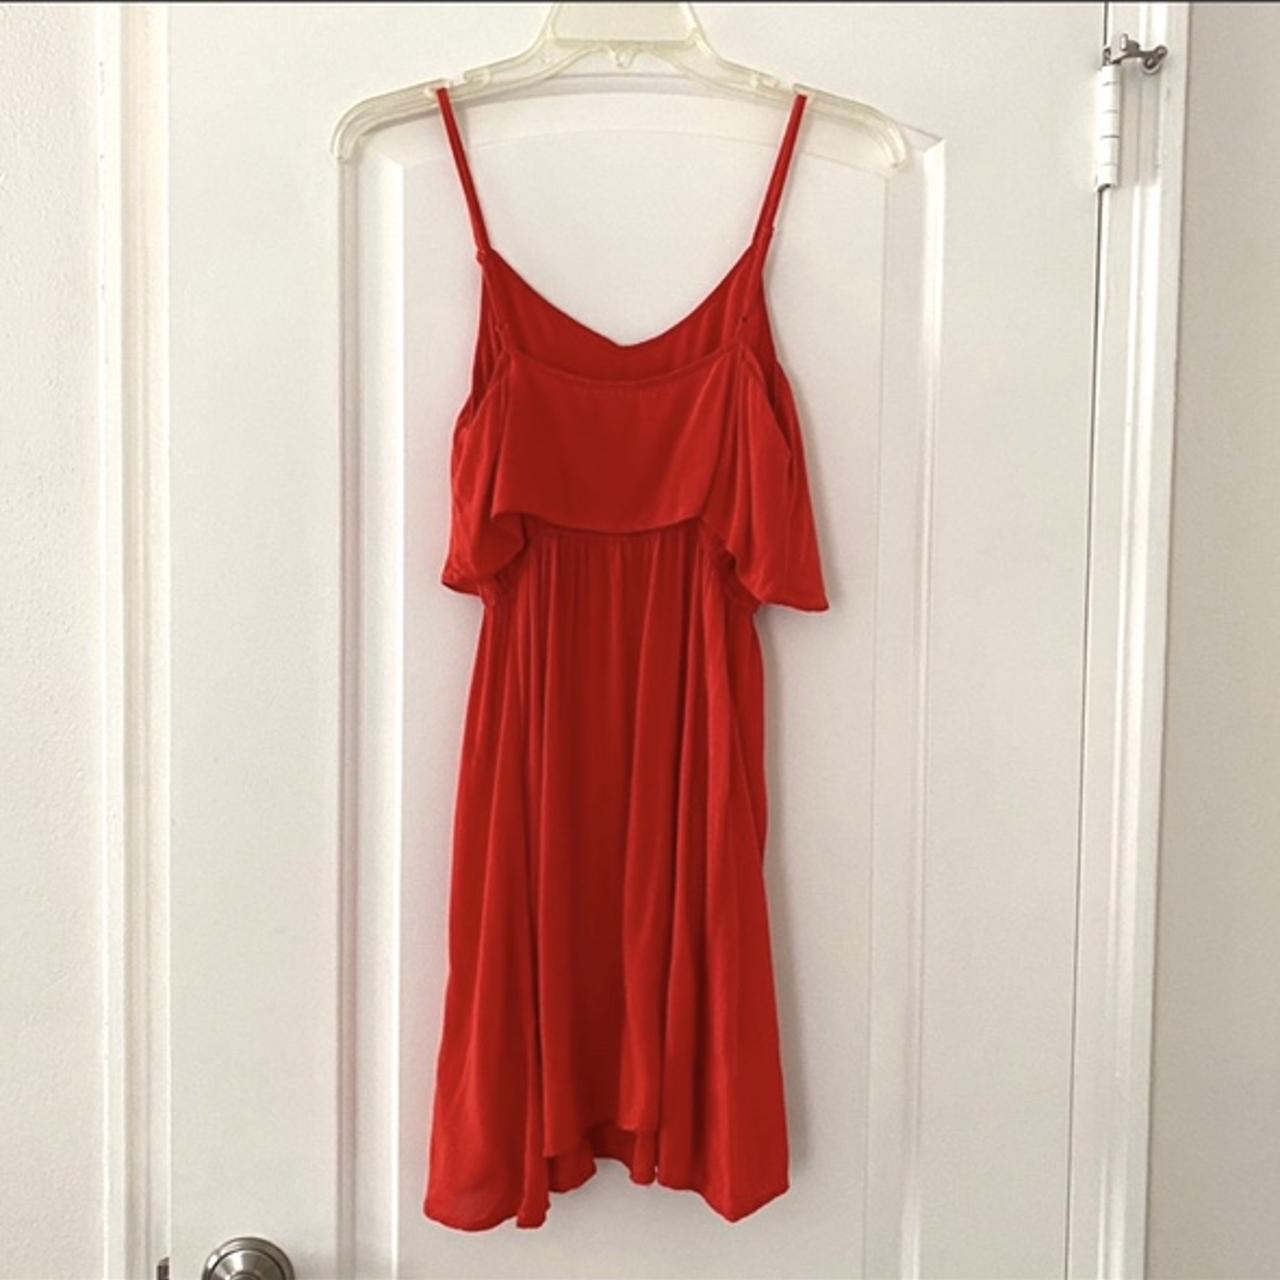 Product Image 3 - Red flowy mini dress. Adjustable